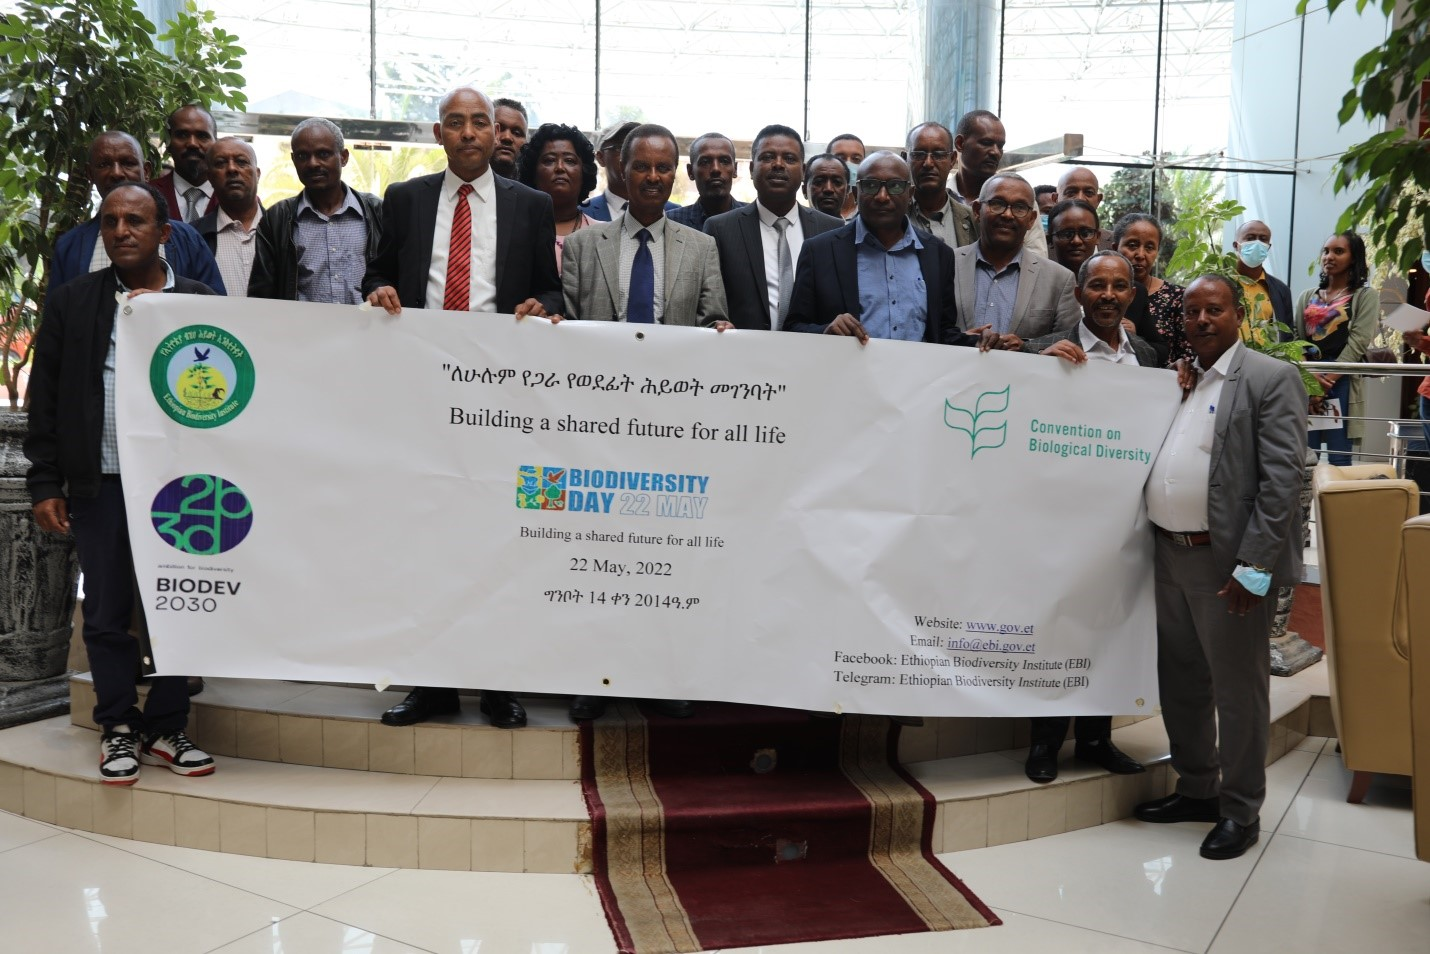 International Biodiversity Day 2022 event in Addis Ababa